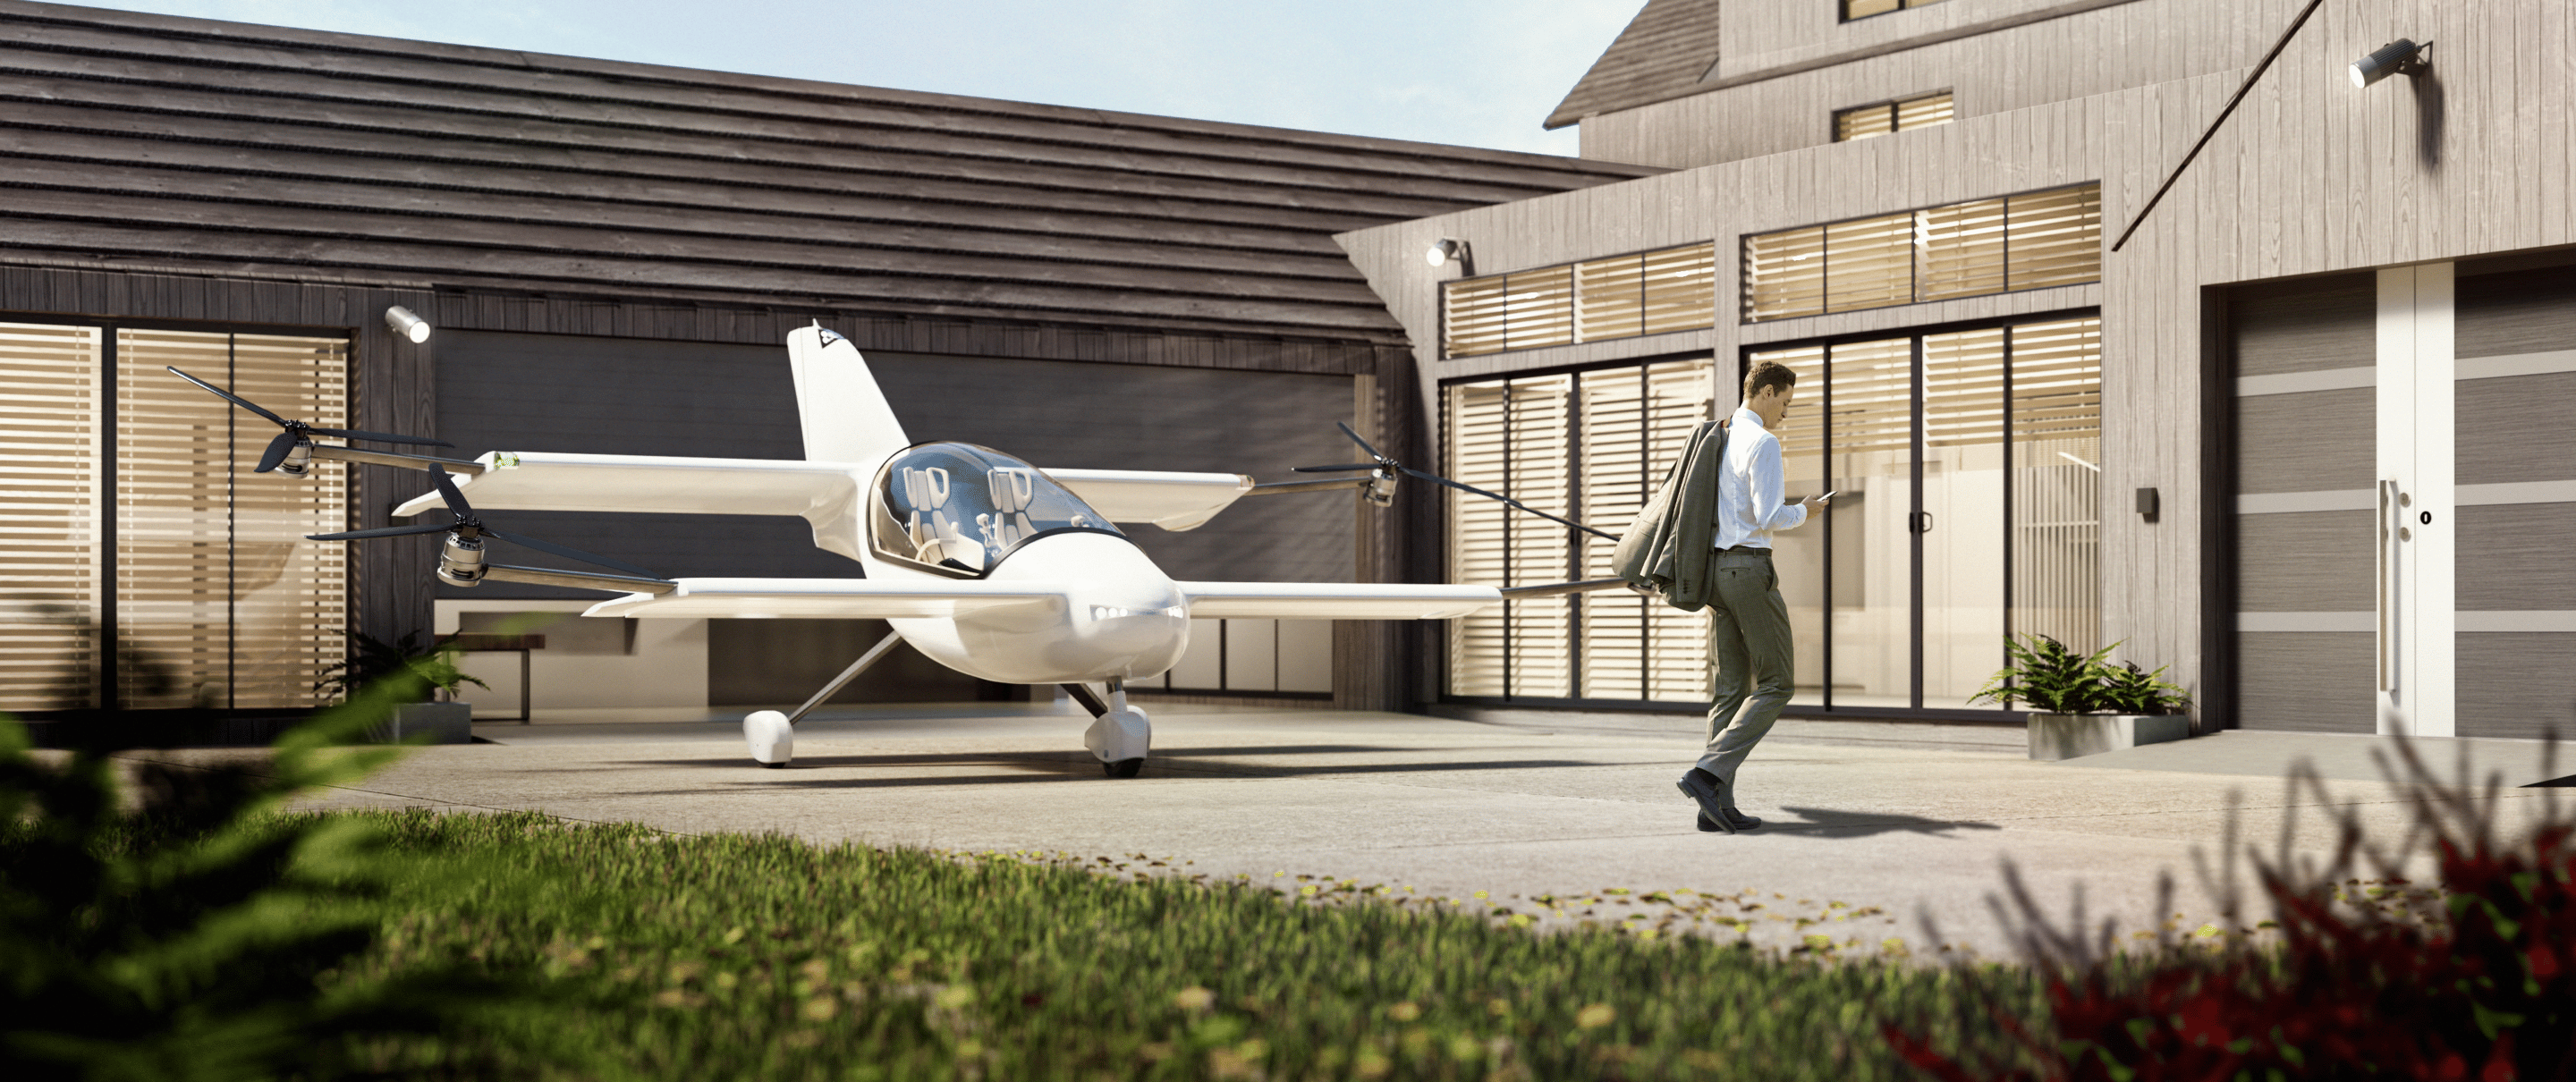 imagen 2 de Skyfly Axe eVTOL Aircraft: de casa al trabajo… volando.